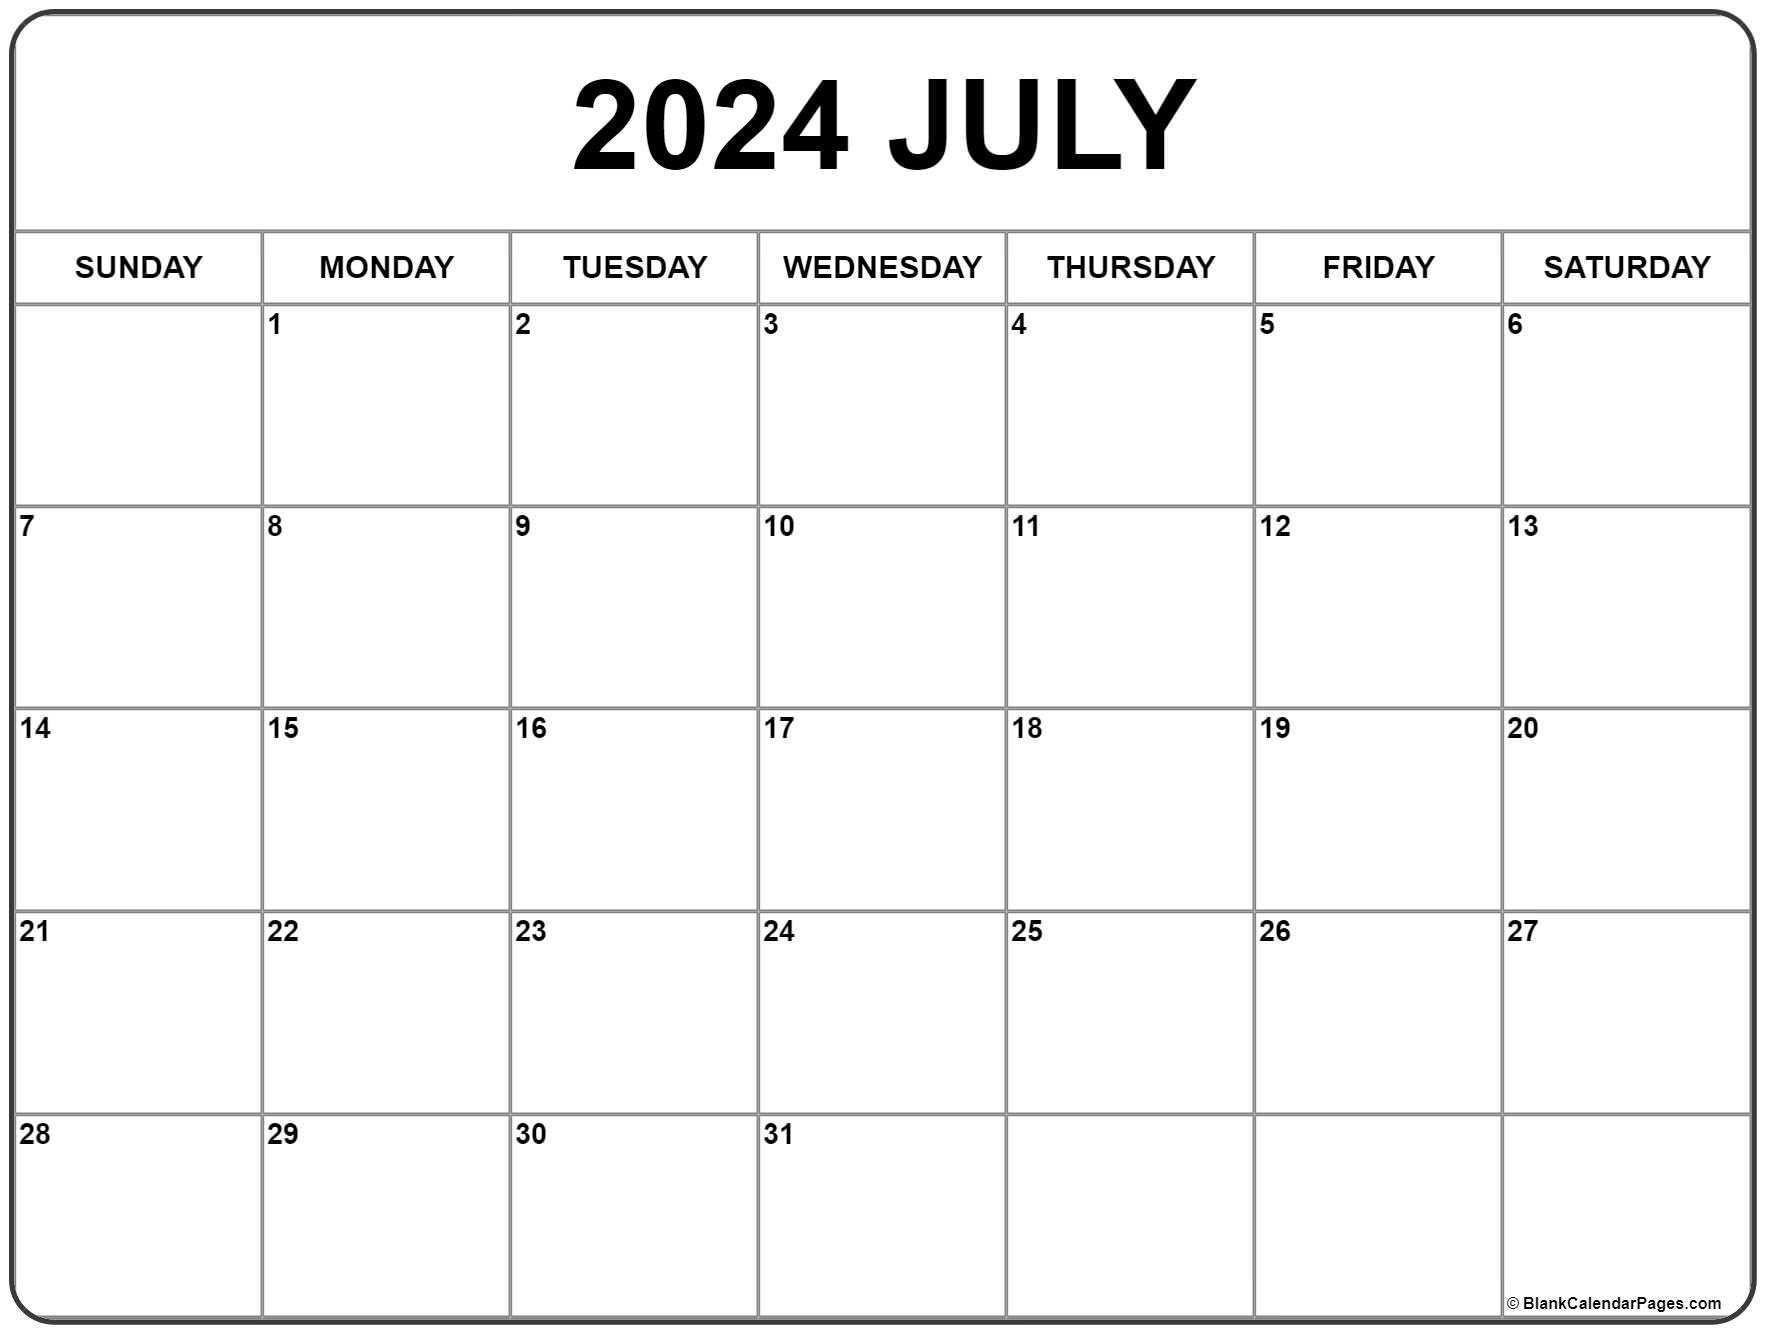 July 2024 Calendar | Free Printable Calendar in 24 July 2024 Calendar Printable